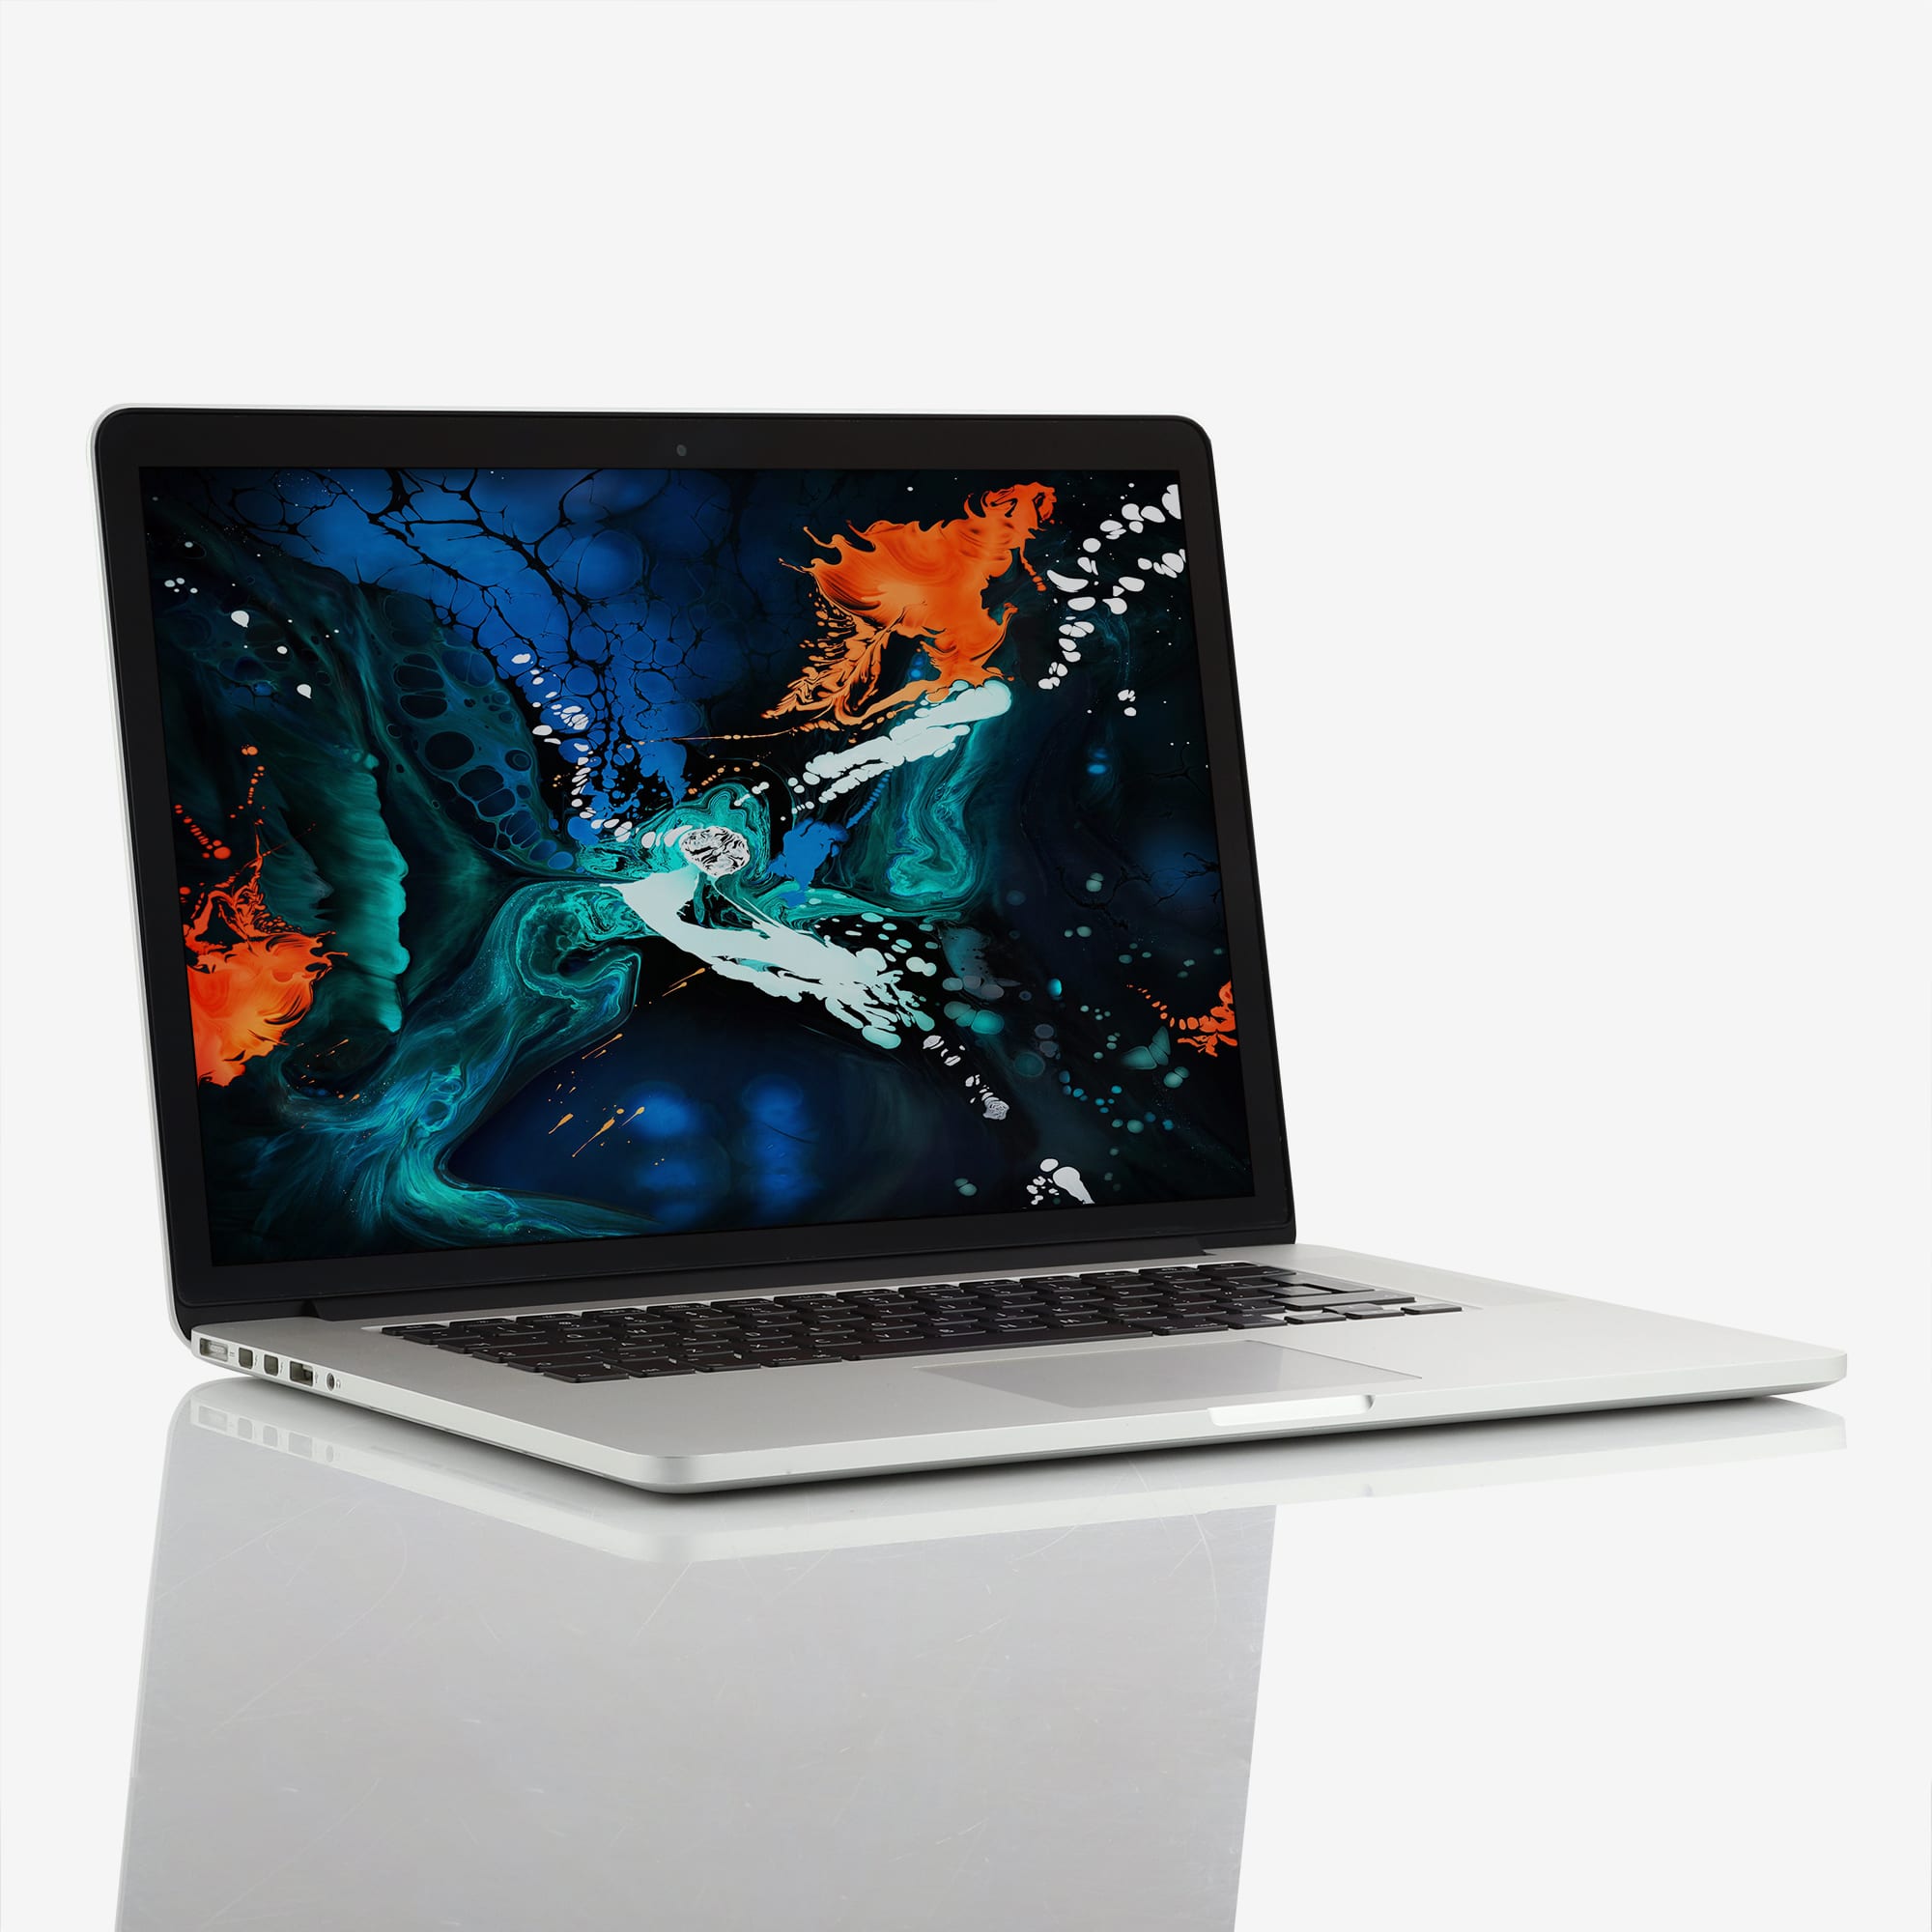 1 x Apple MacBook Pro Retina 15 Inch Intel Core i7 2.80 GHz (2015)